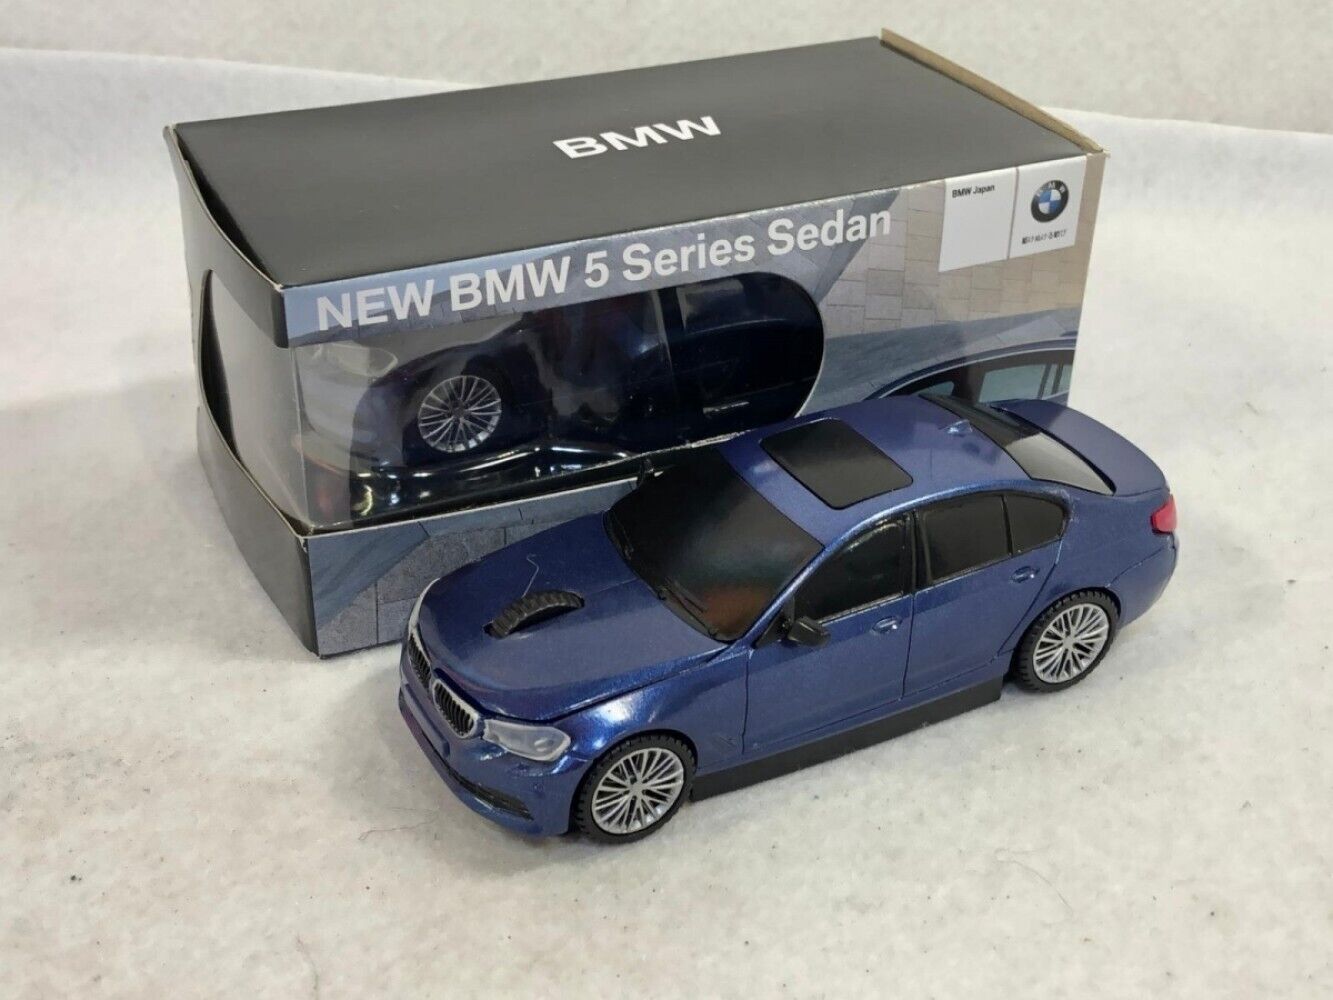 BMW New 5 Series Sedan Blue Mini Car Type Wireless Mouse F/S